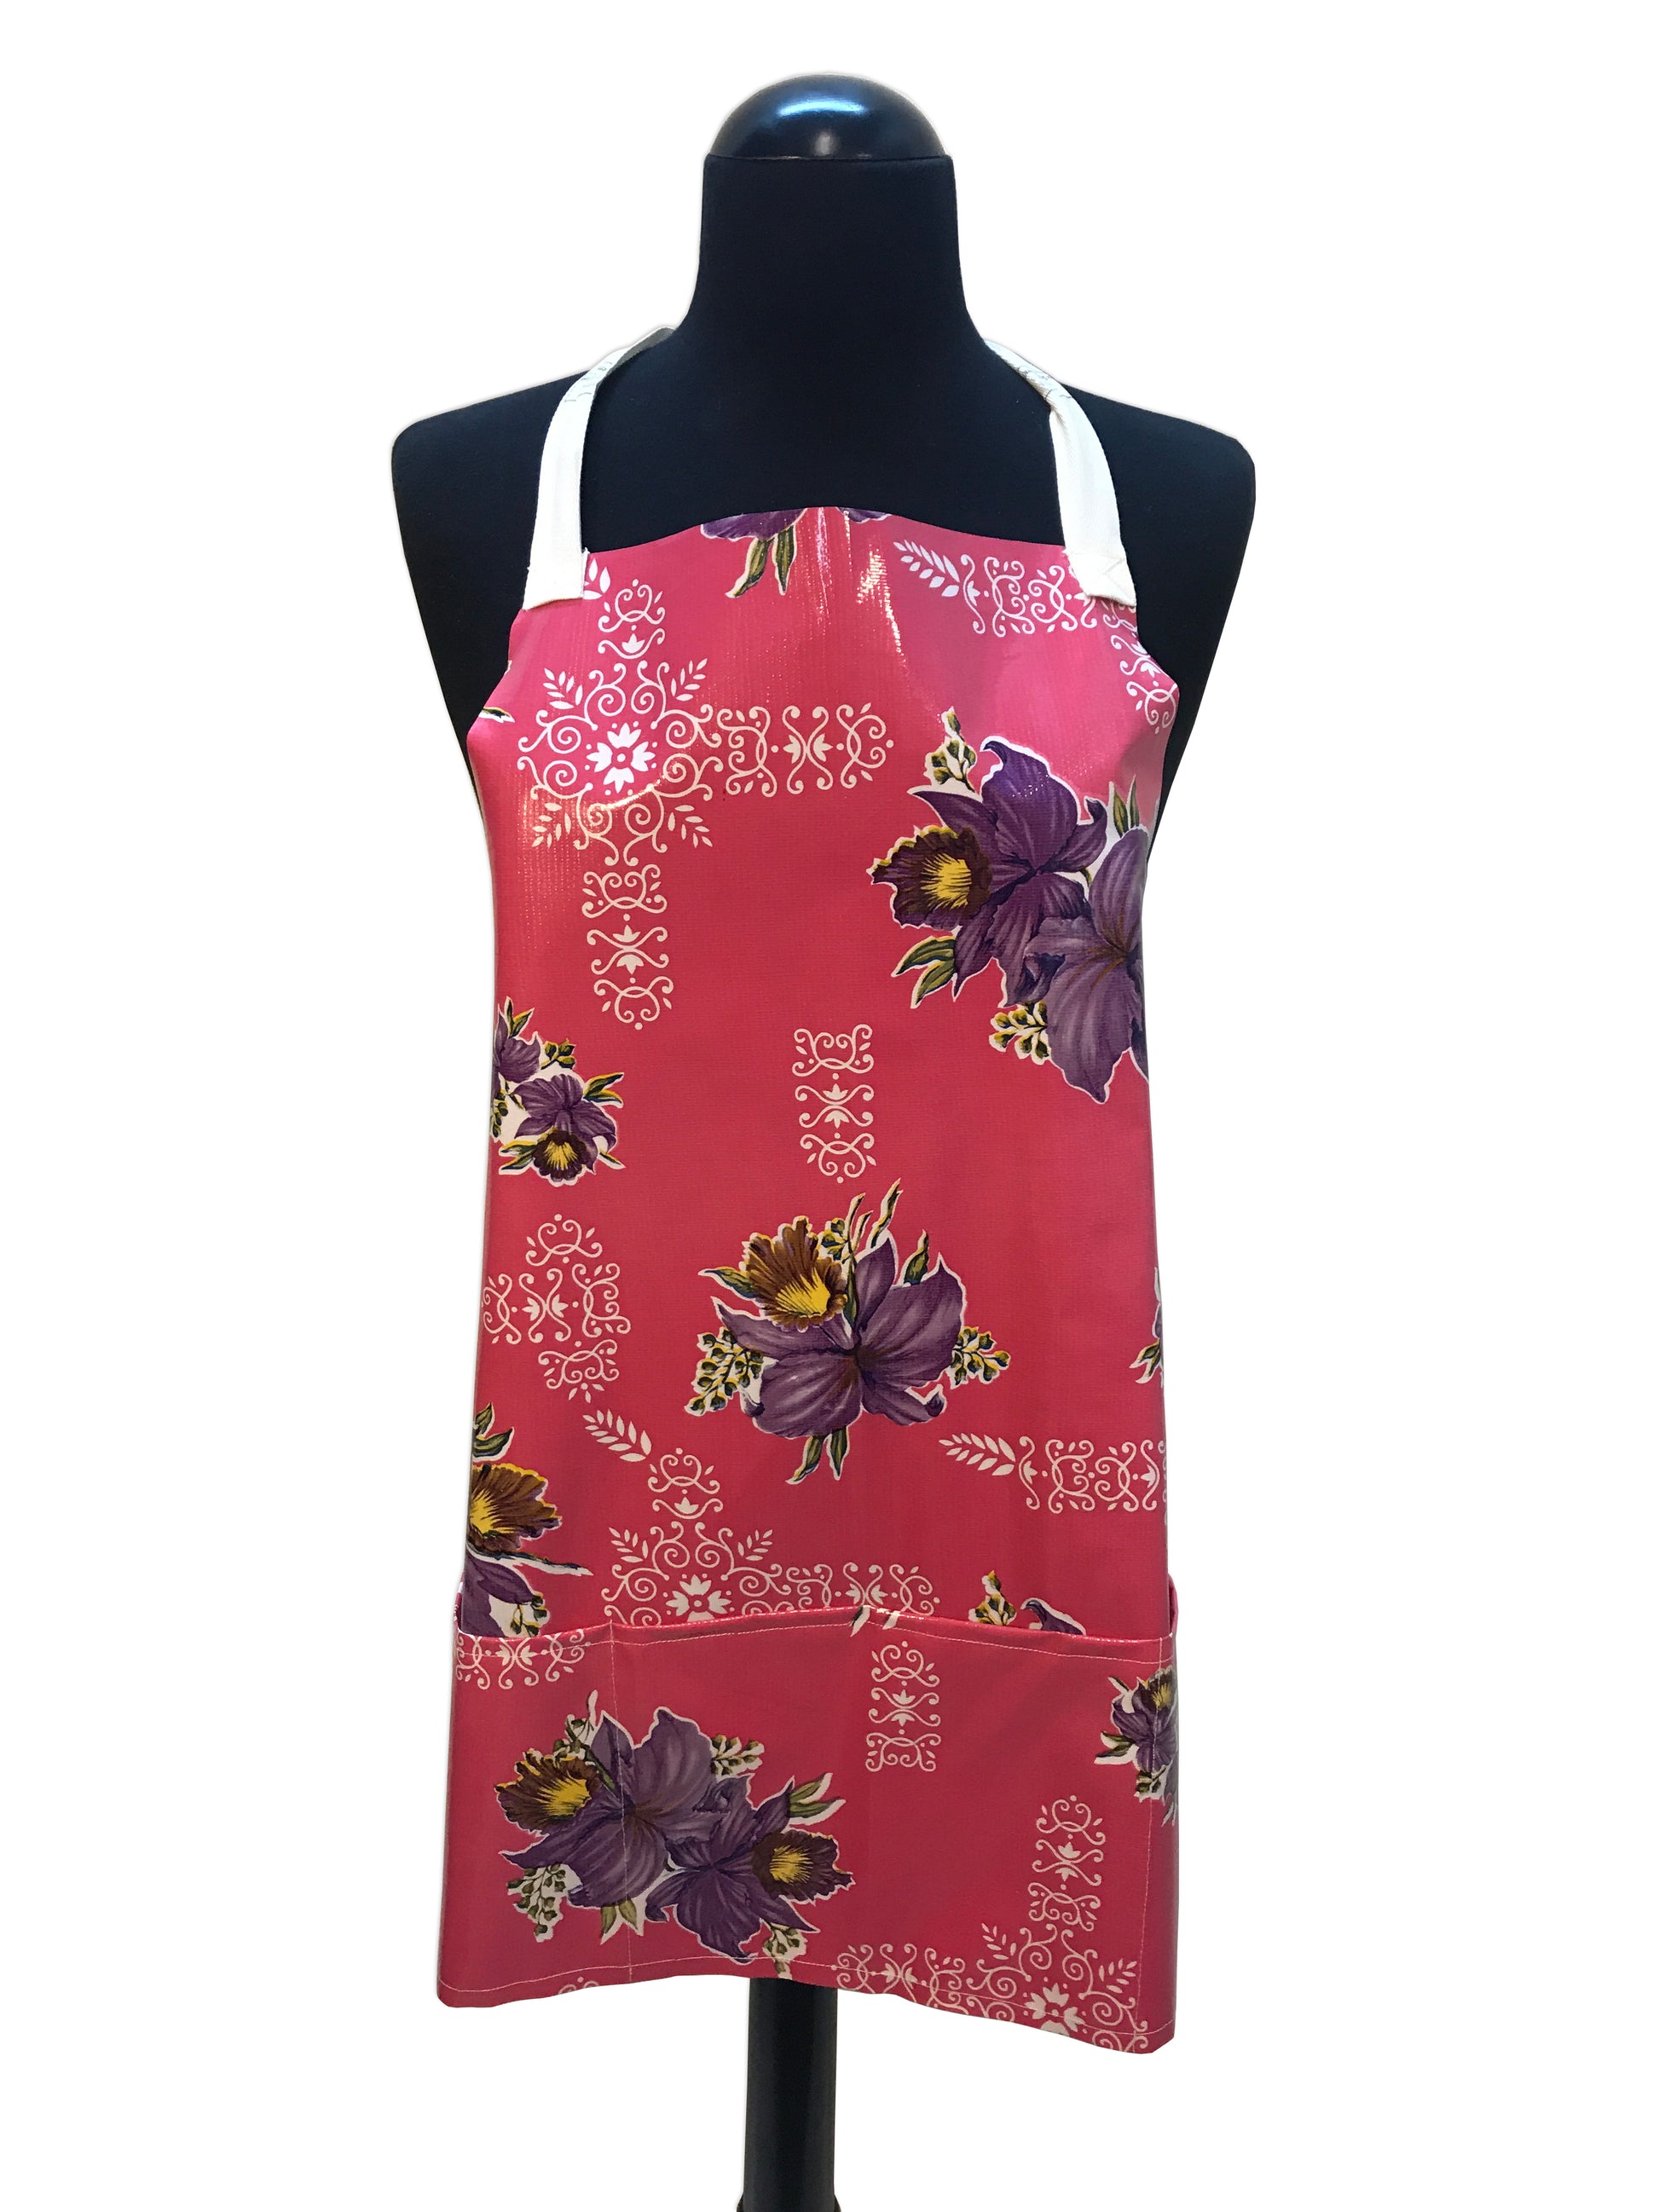 Purple Flowers Oil Cloth Apron - InRugCo Studio & Gift Shop